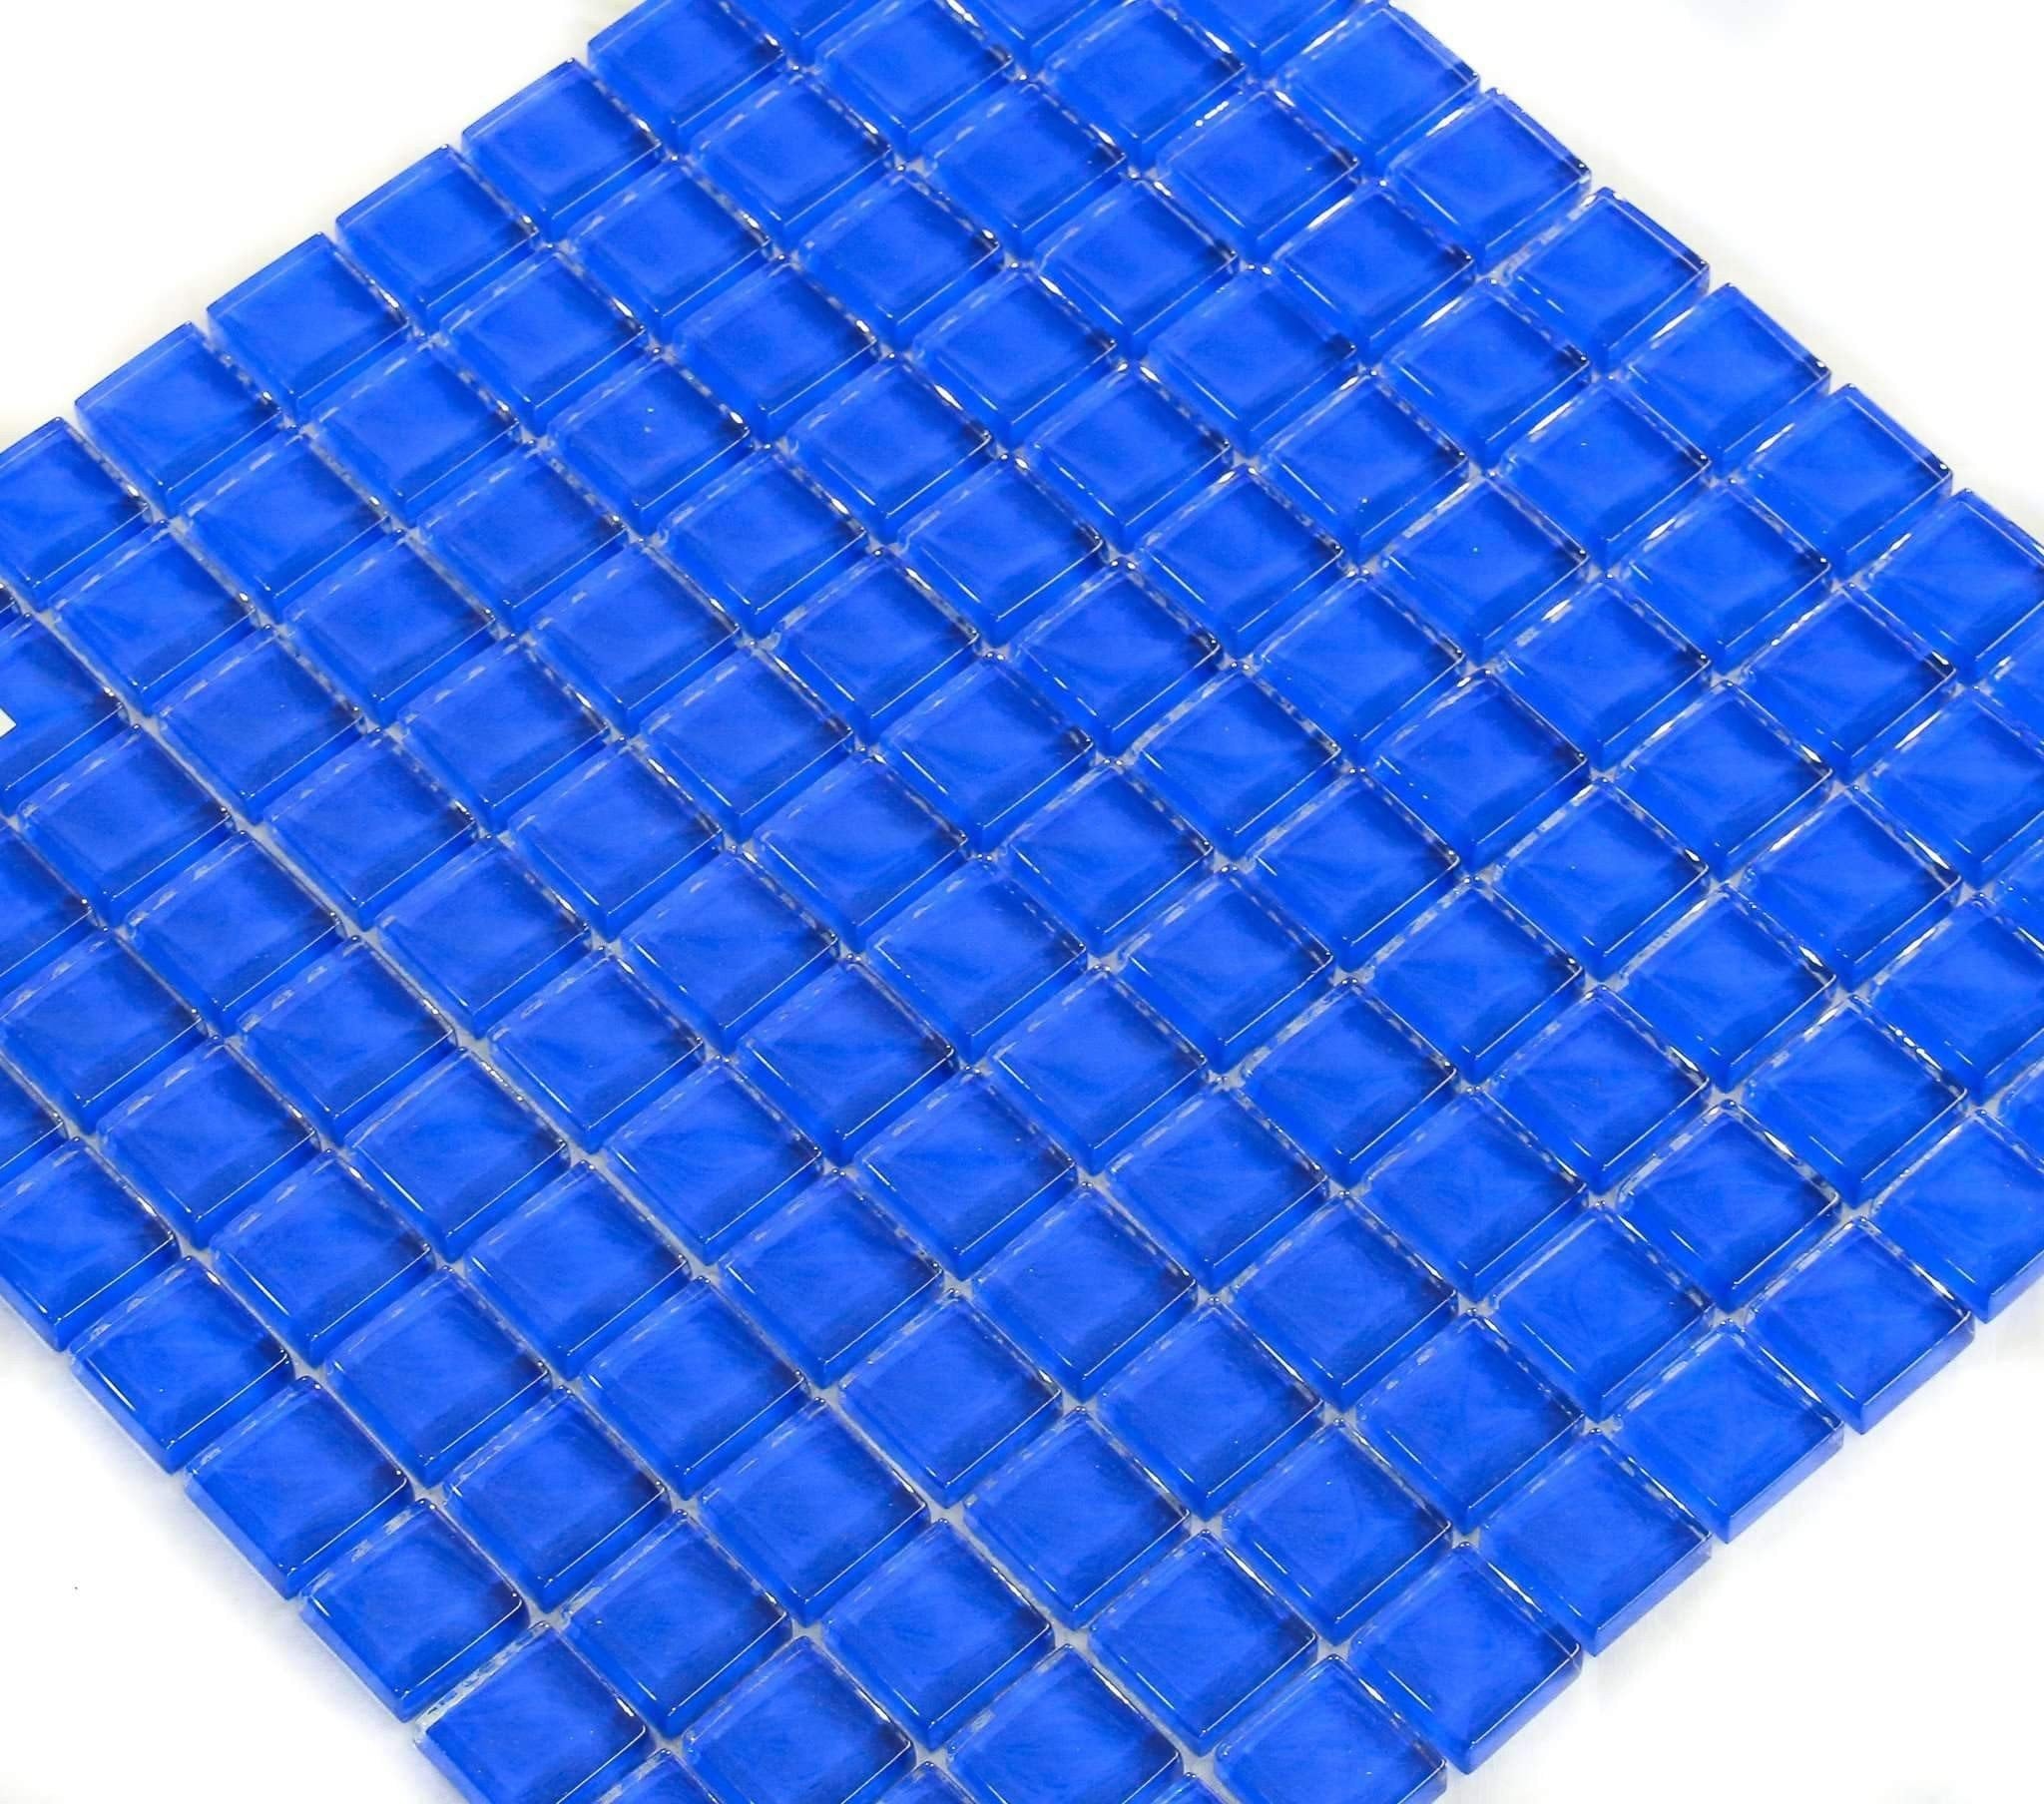 Blue Ruby - Glass Tile cheap stone veneer clearance - Discount Stones wholesale stone veneer, cheap brick veneer, cultured stone for sale